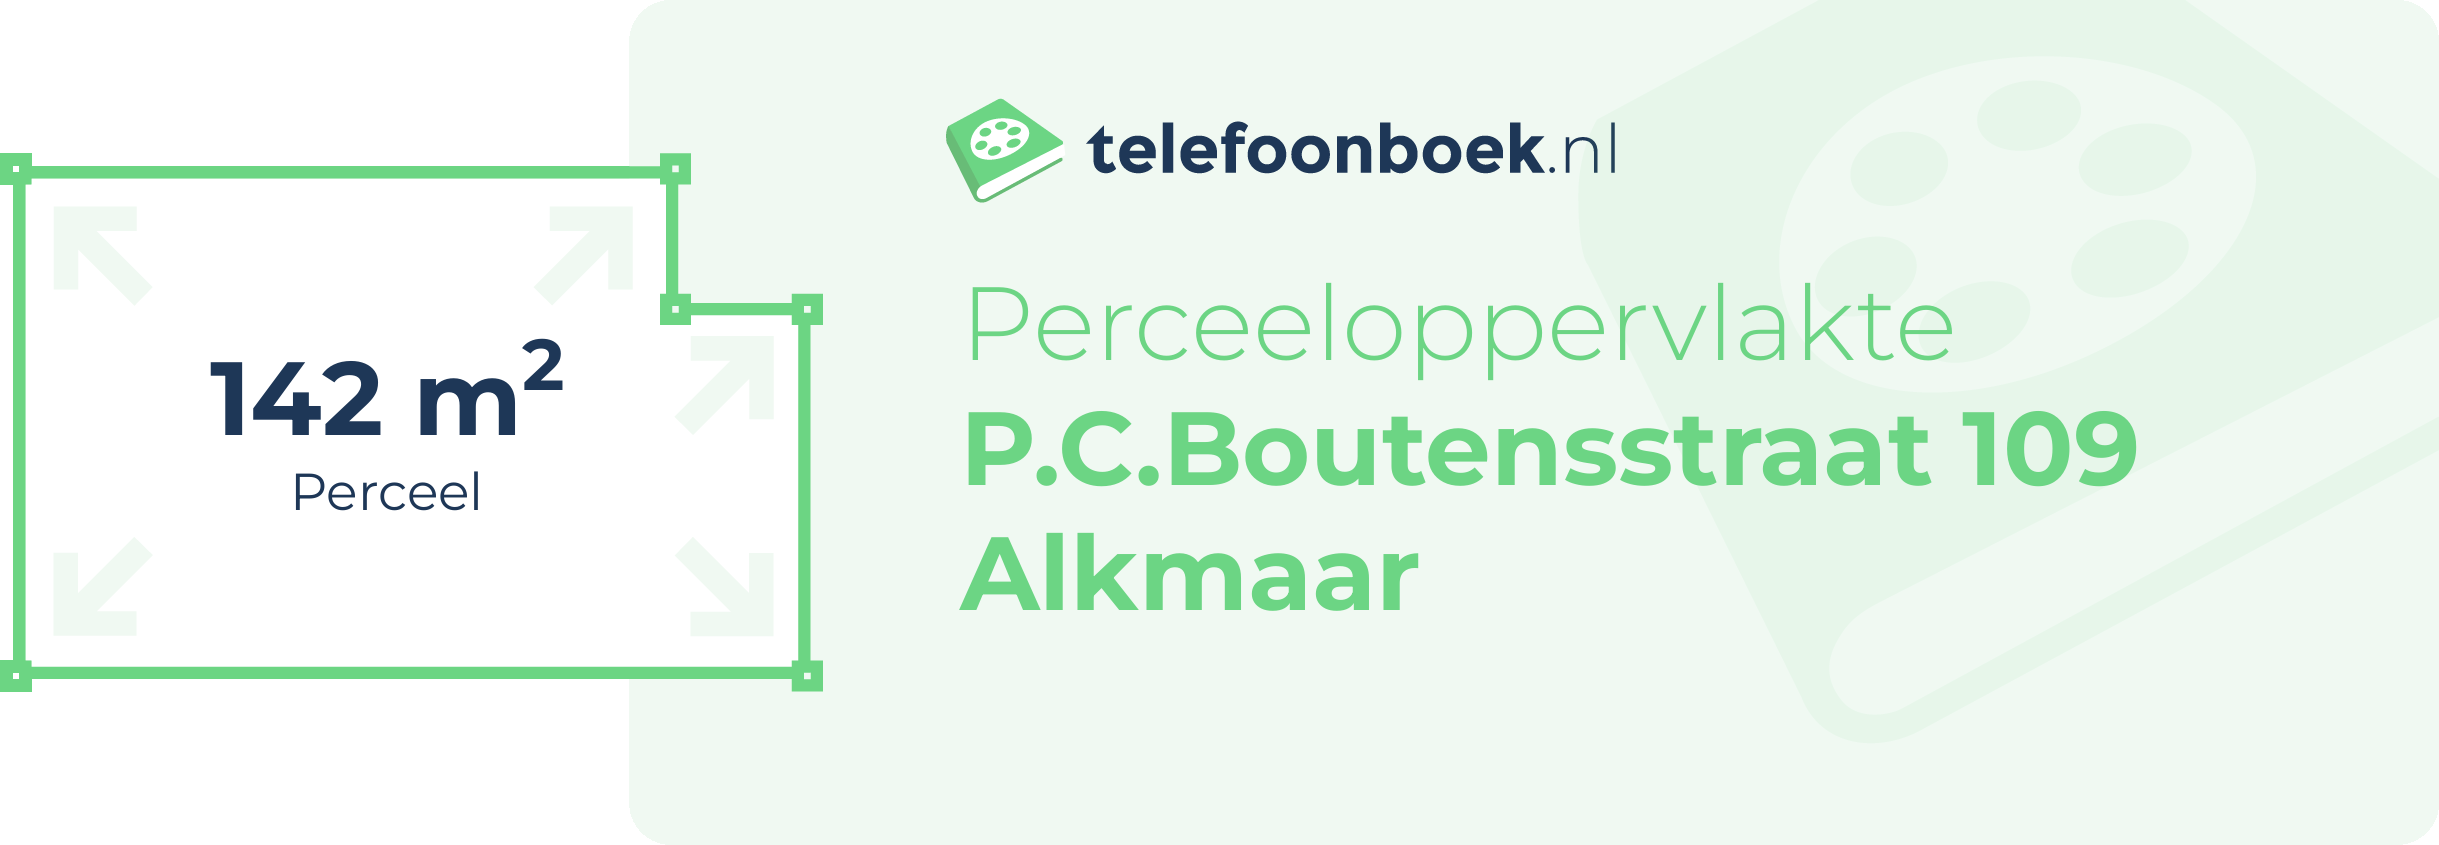 Perceeloppervlakte P.C.Boutensstraat 109 Alkmaar